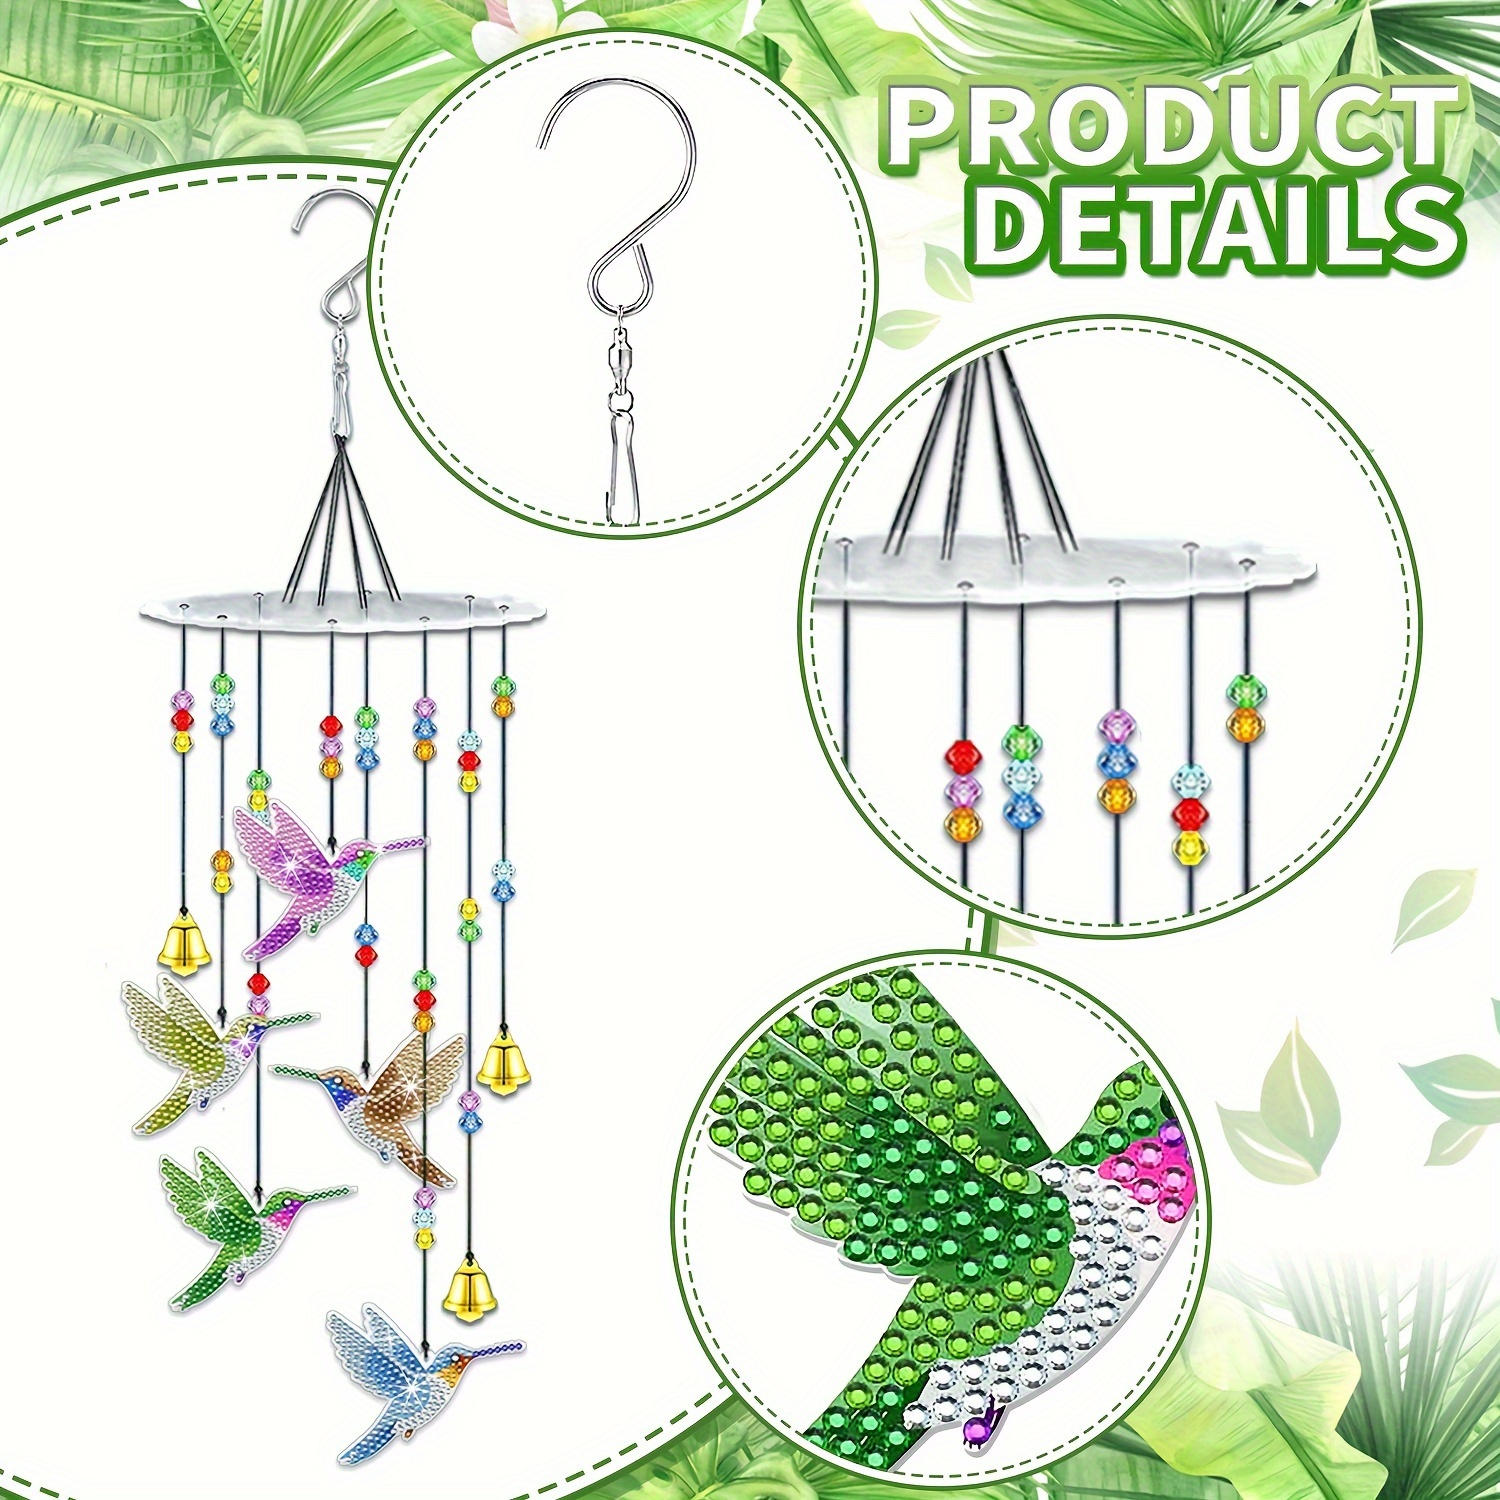 

Diy Diamond Art Wind Chime Kit - Butterfly & Bird Designs, Double-sided Pendant Craft Set For Home & Garden Decor